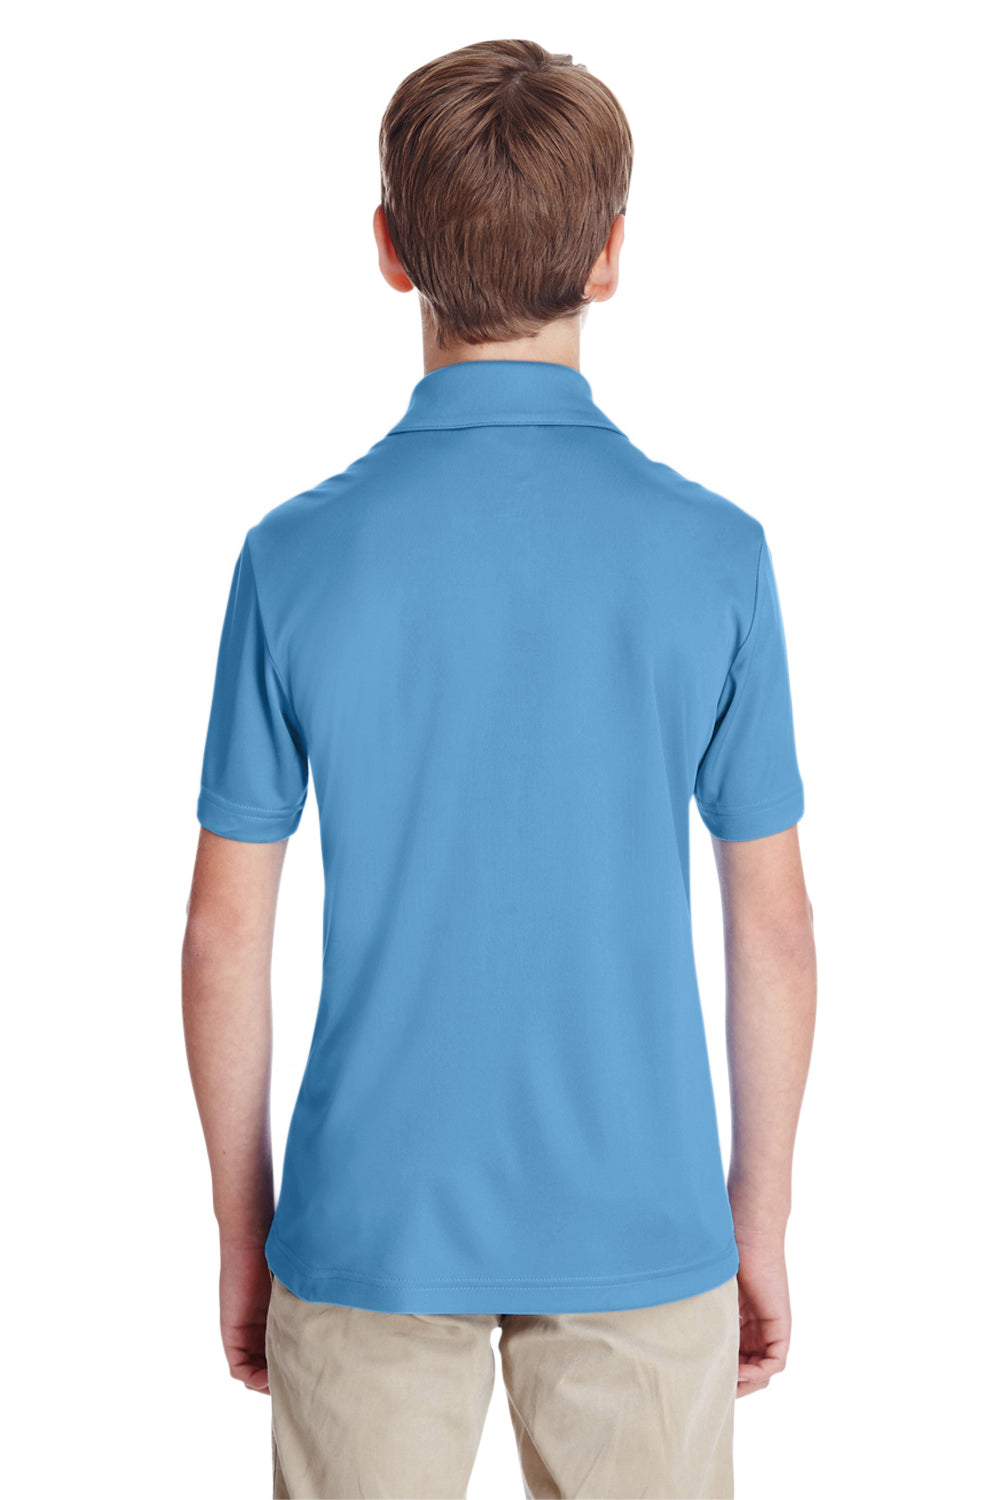 Team 365 TT51Y Youth Zone Performance Moisture Wicking Short Sleeve Polo Shirt Light Blue Back